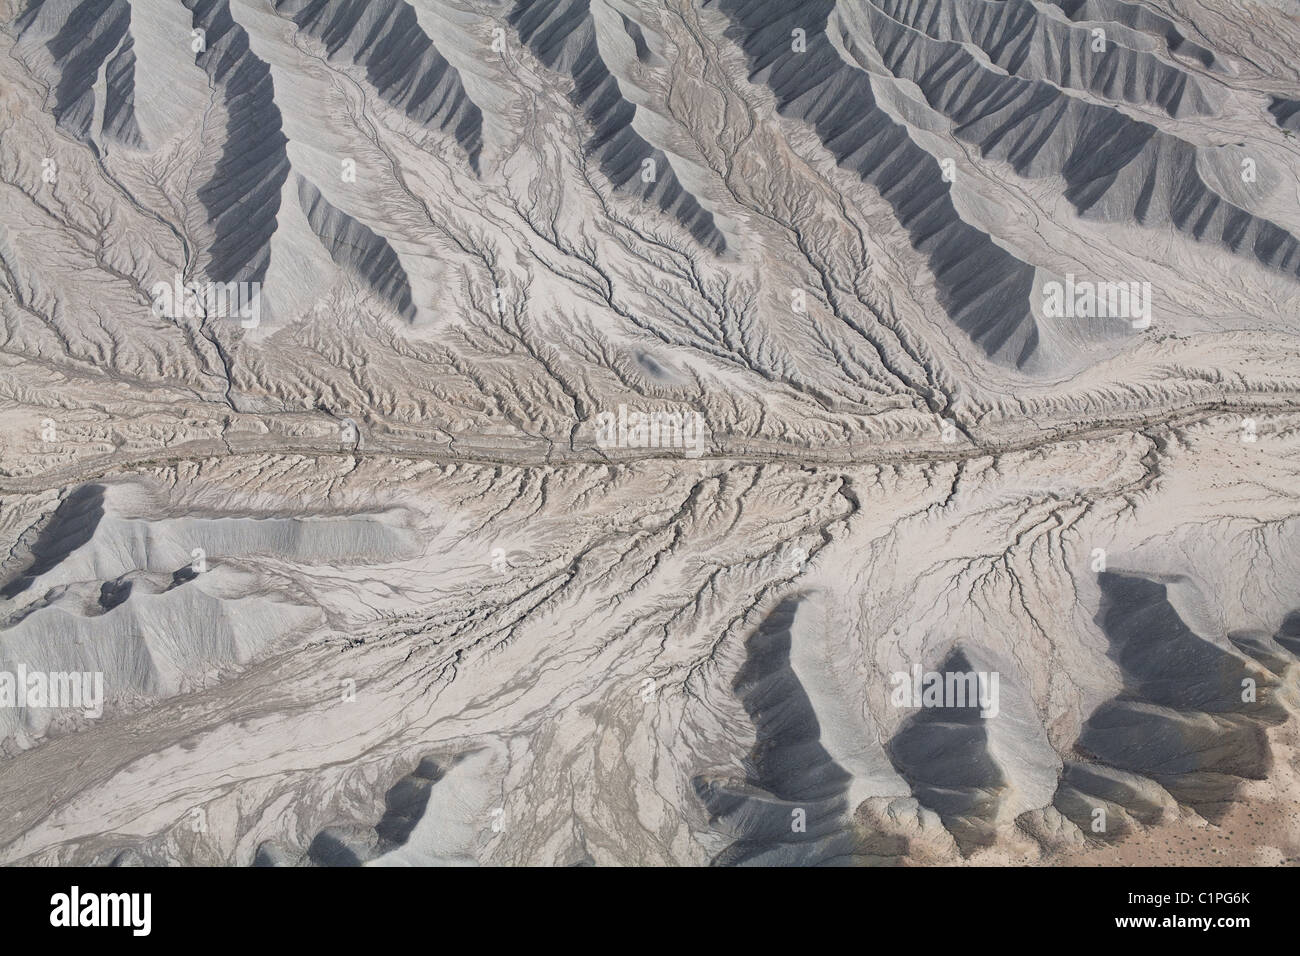 LUFTAUFNAHME. Dendritisches Drainagemuster. Erosionsrinnen im Mancos Shale. Caineville, Süd-Utah, USA. Stockfoto